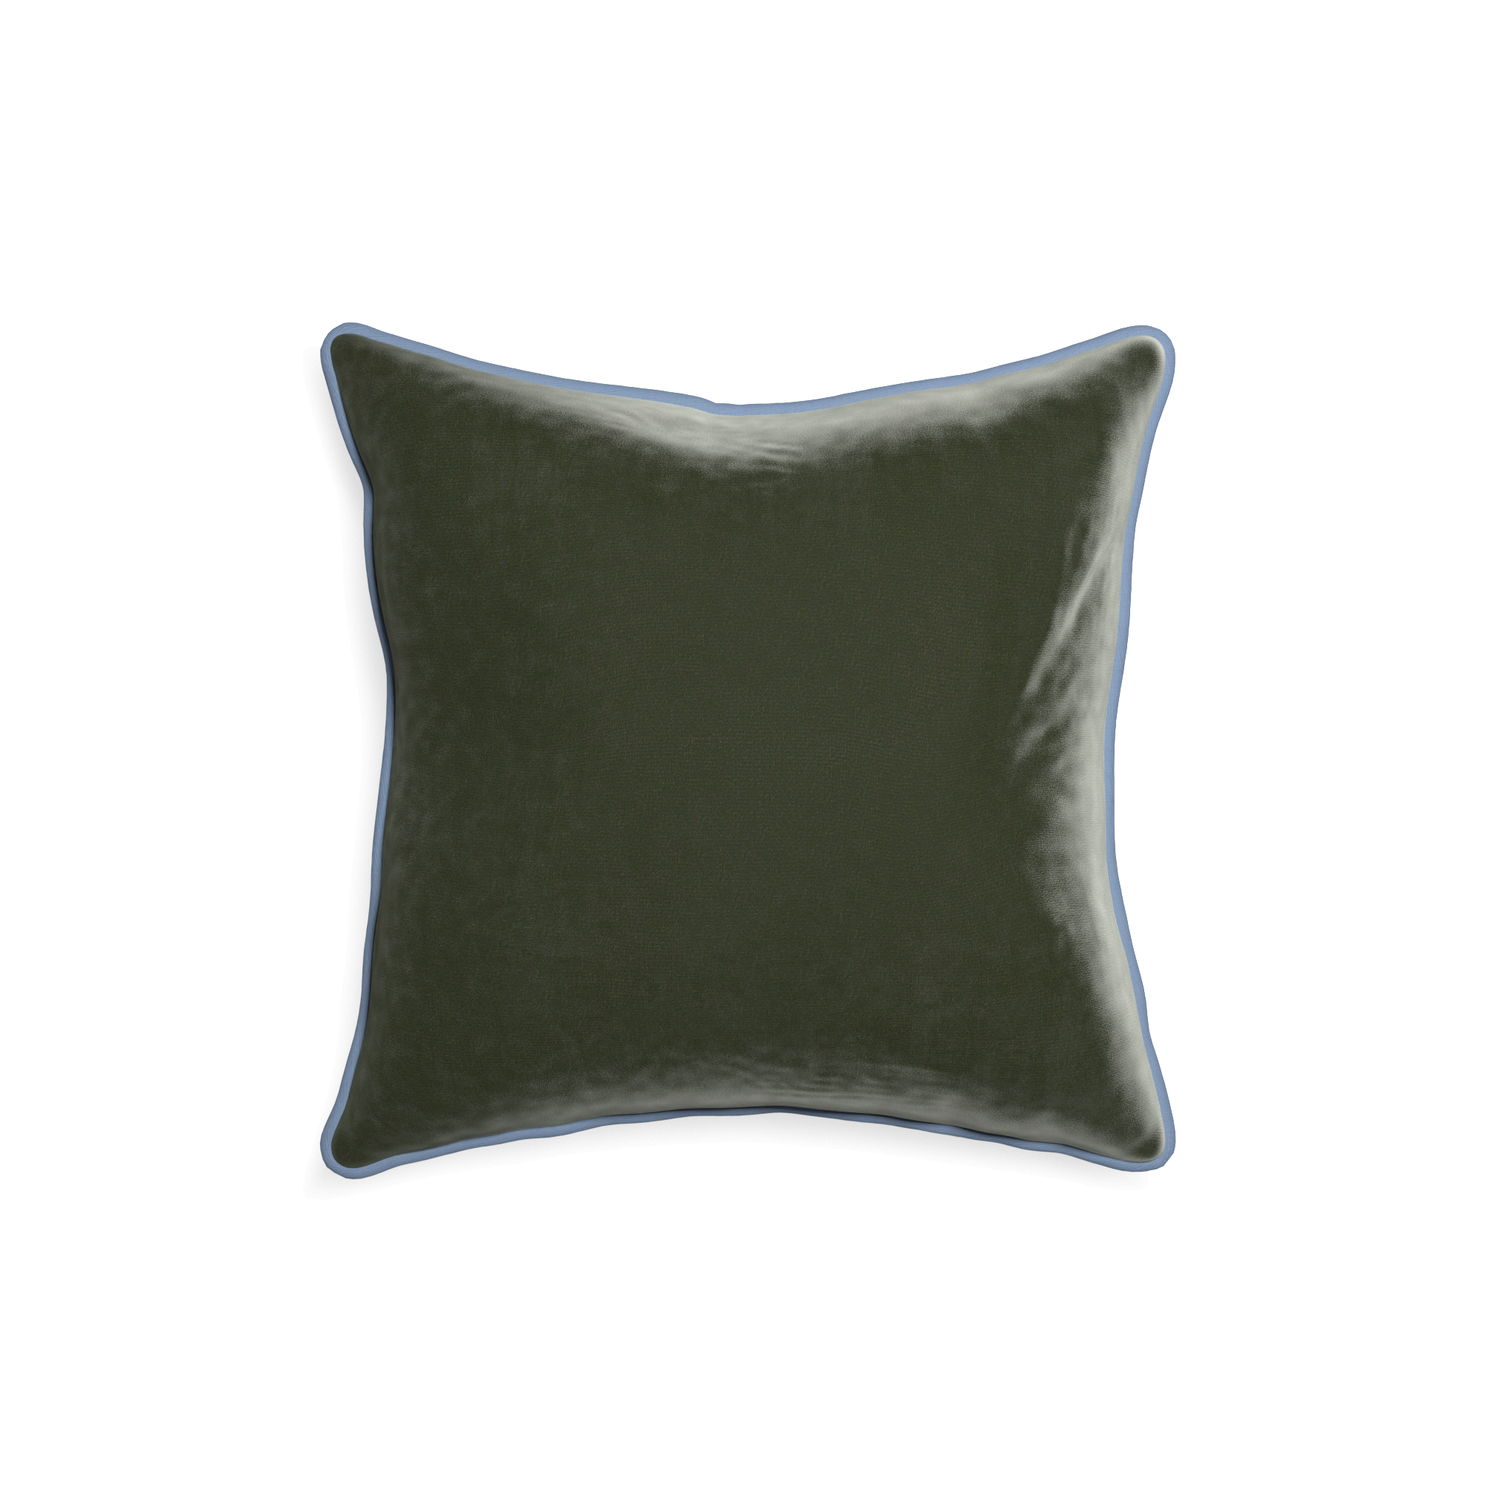 18-square fern velvet custom pillow with sky piping on white background